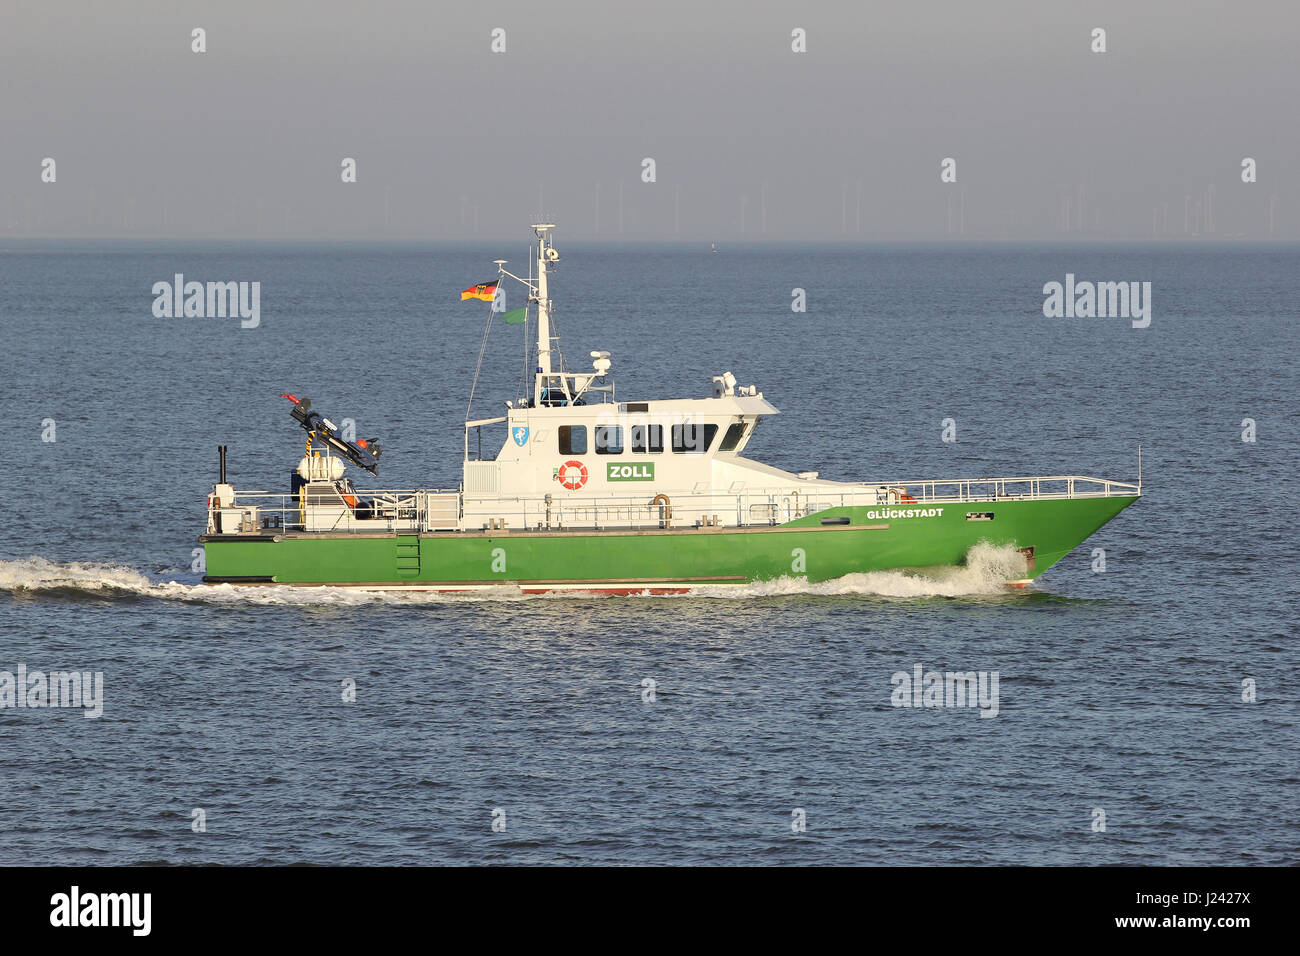 German customs boat GLUCKSTADT on the river Elbe. Stock Photo